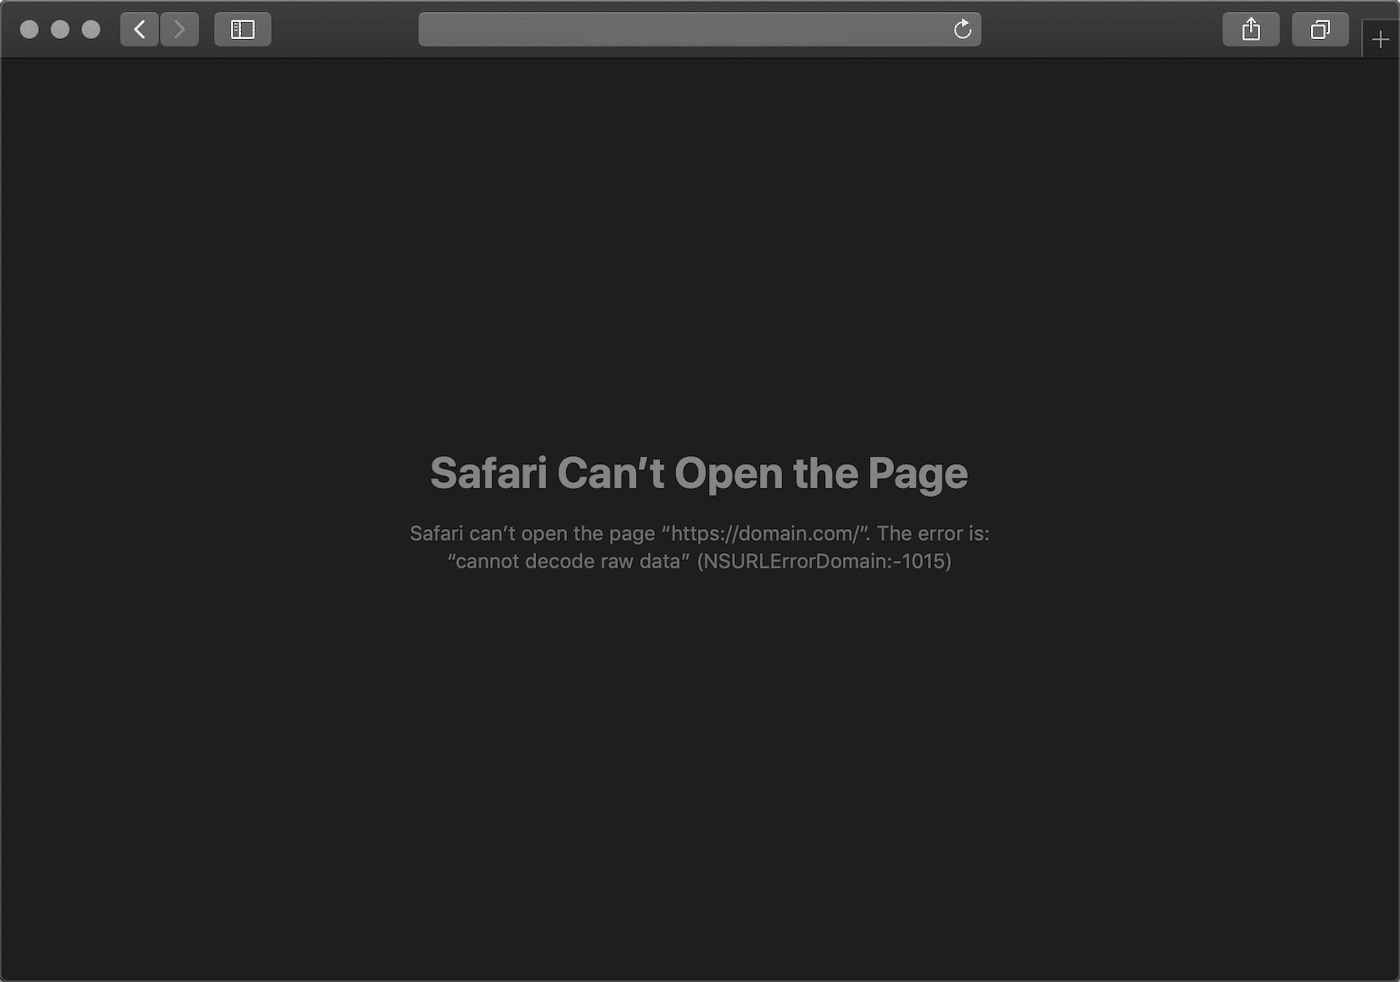 The ERR_CONTENT_DECODING_FAILED error in Safari